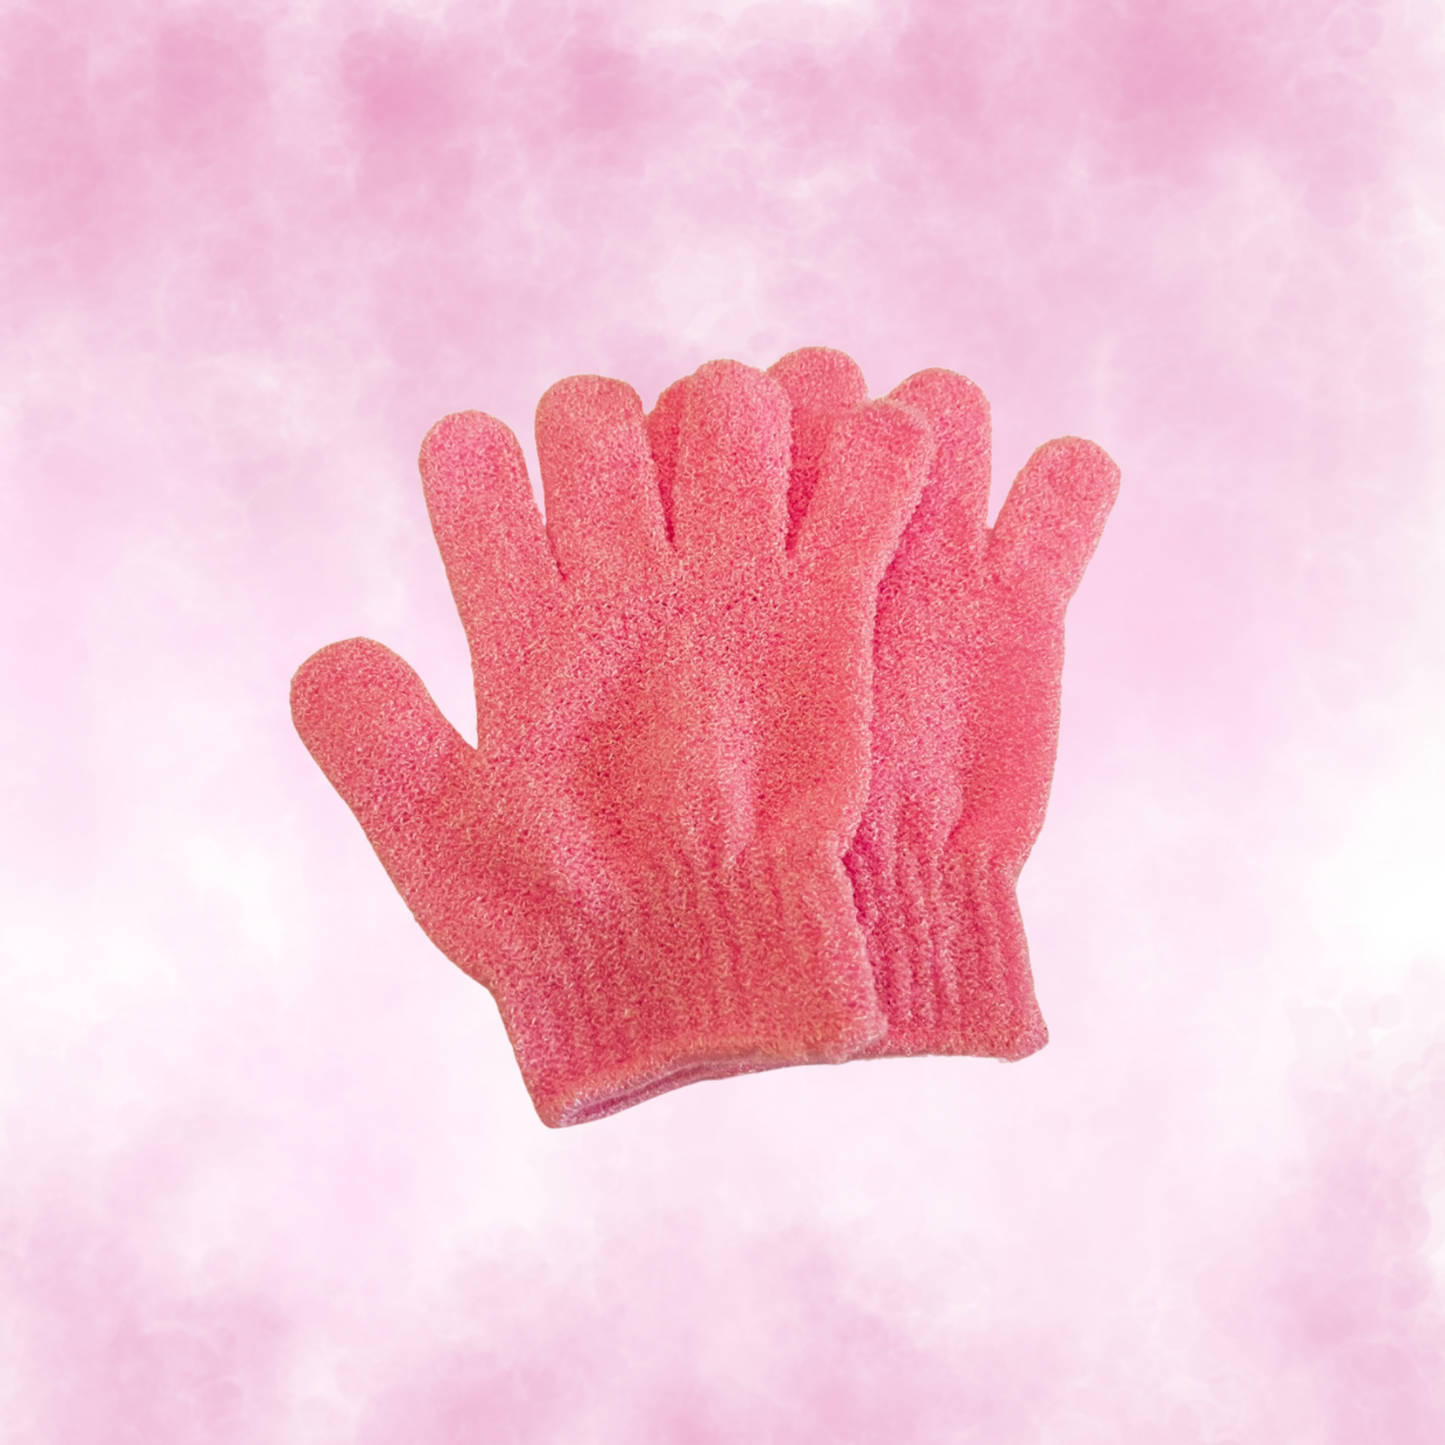 Pink Dual Exfoliating Gloves Wash for Shower Body Scrub/Bath Gloves Exfoliating Mitt Remove Dead Skin Cells